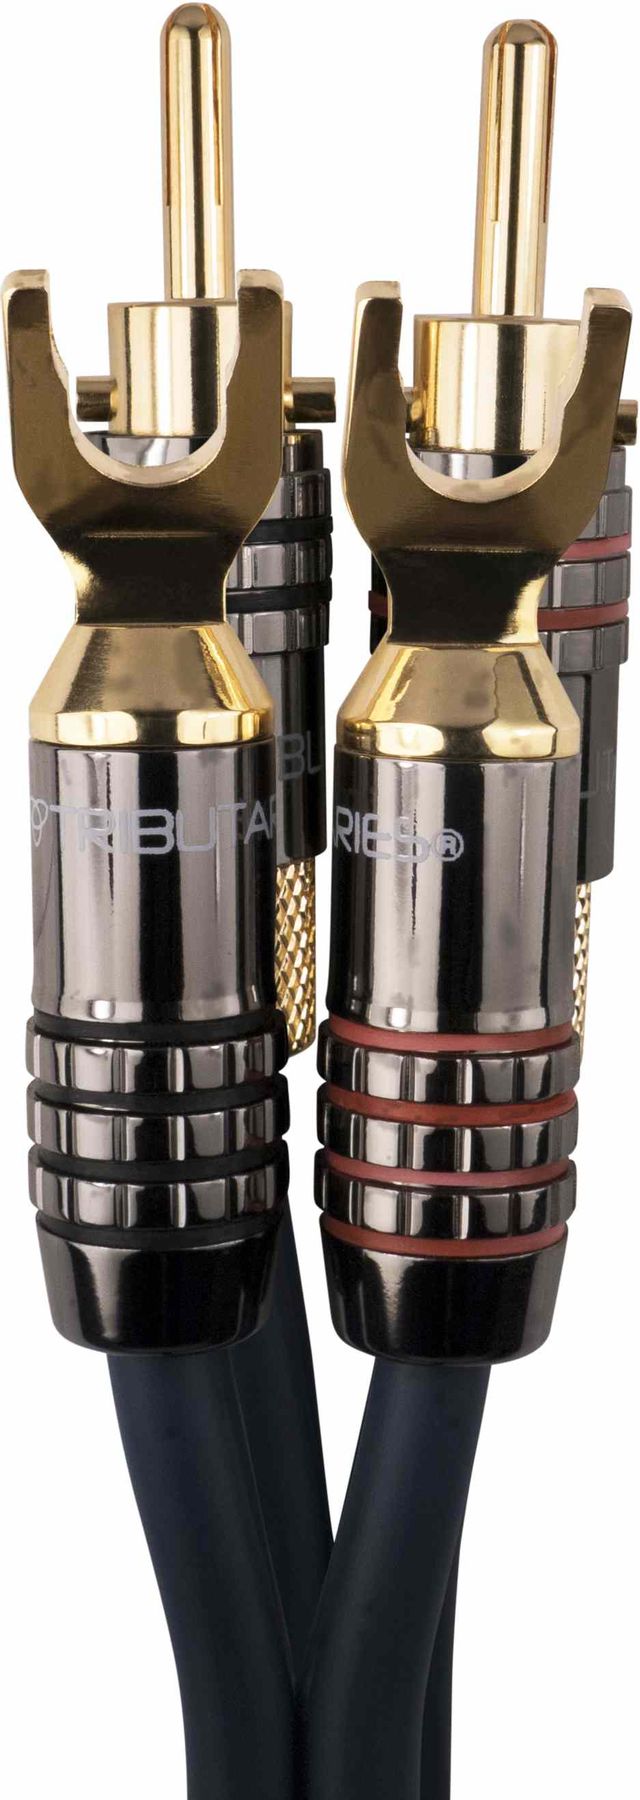 Tributaries® Serires 8 8 Ft. Banana Plugs/Spade Lugs Speaker Cable